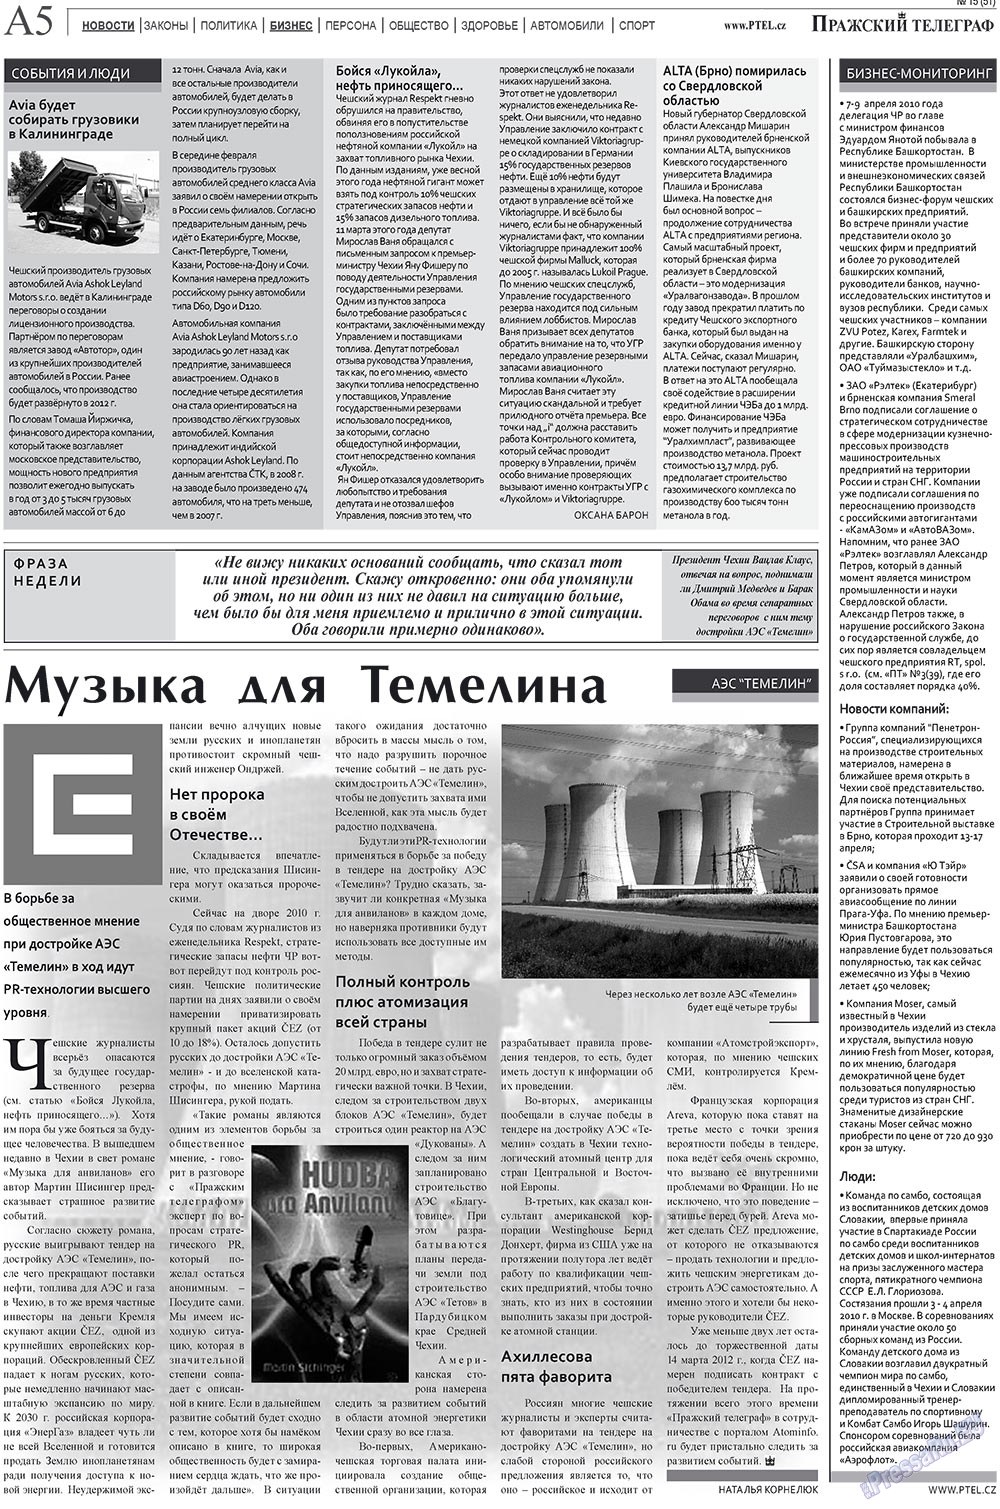 Пражский телеграф, газета. 2010 №15 стр.5